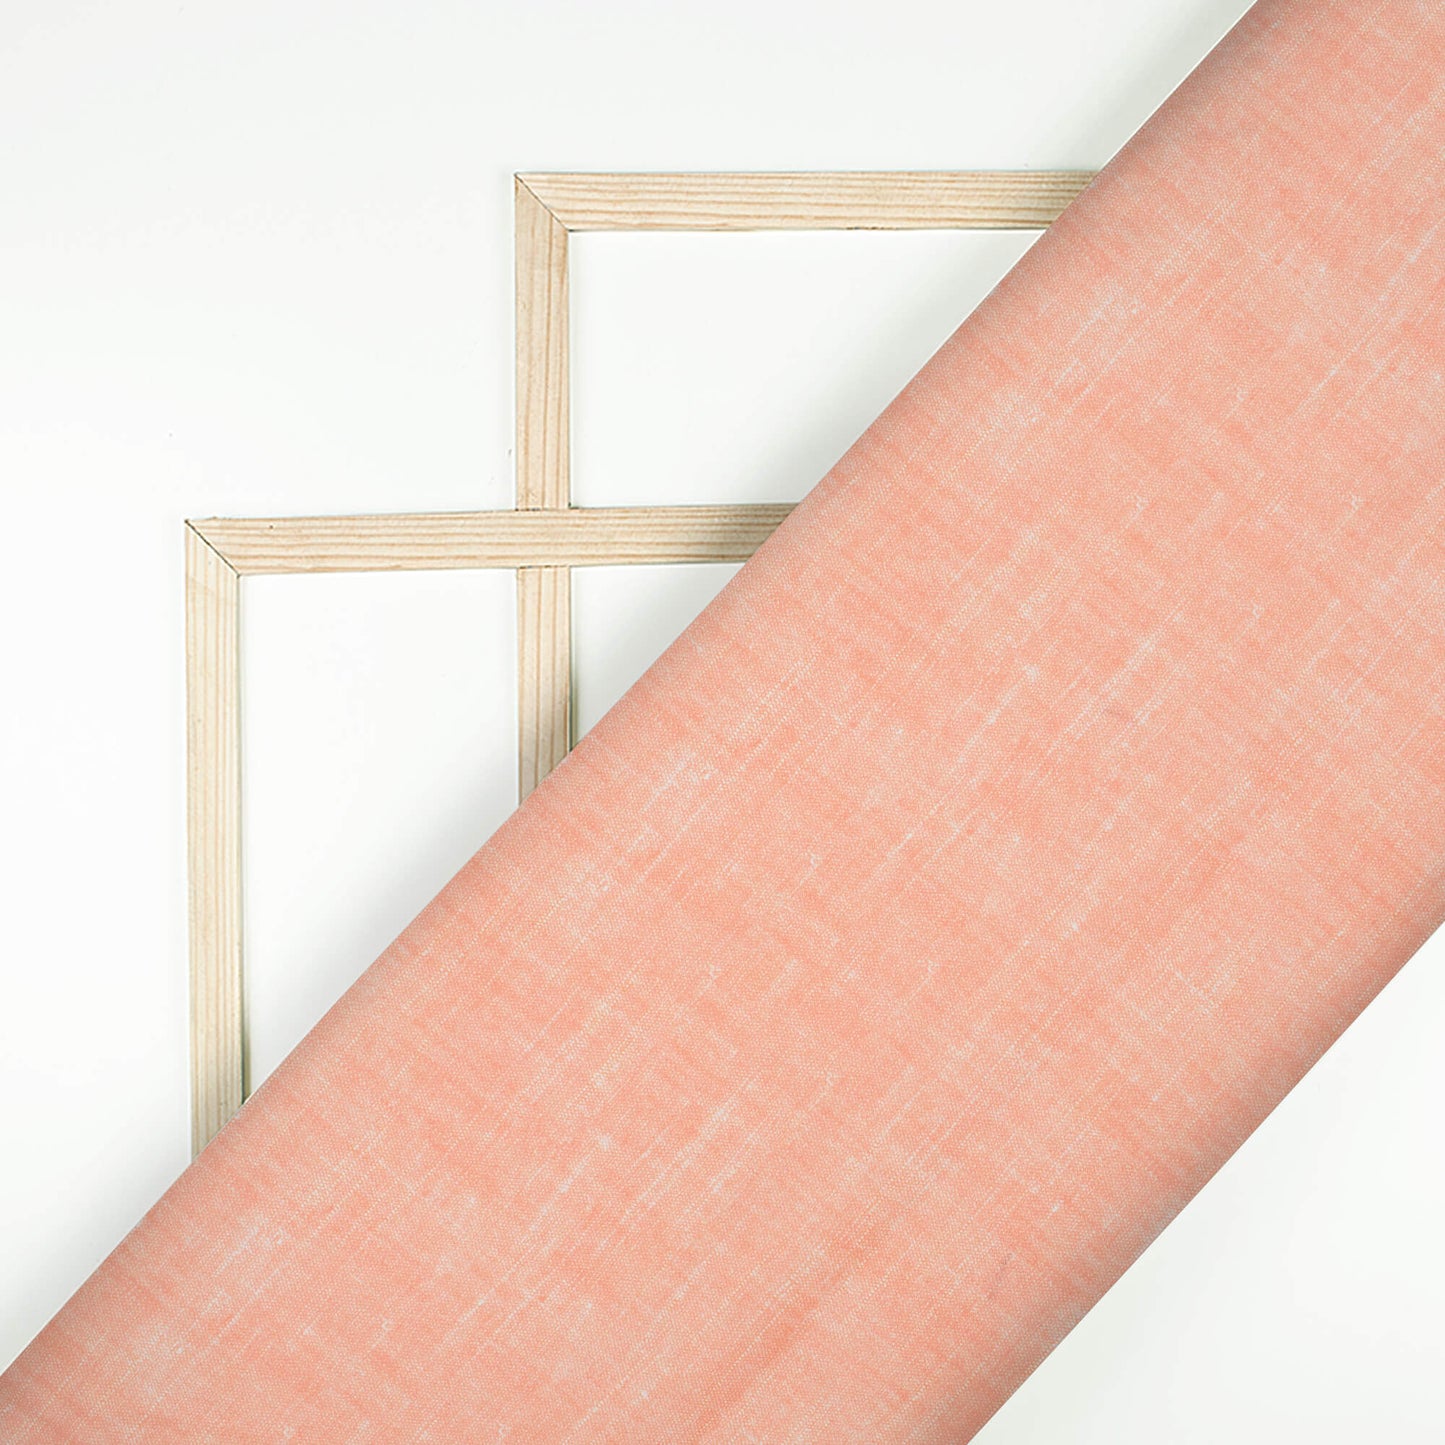 Peach Texture Pattern Digital Print Poly Cambric Fabric